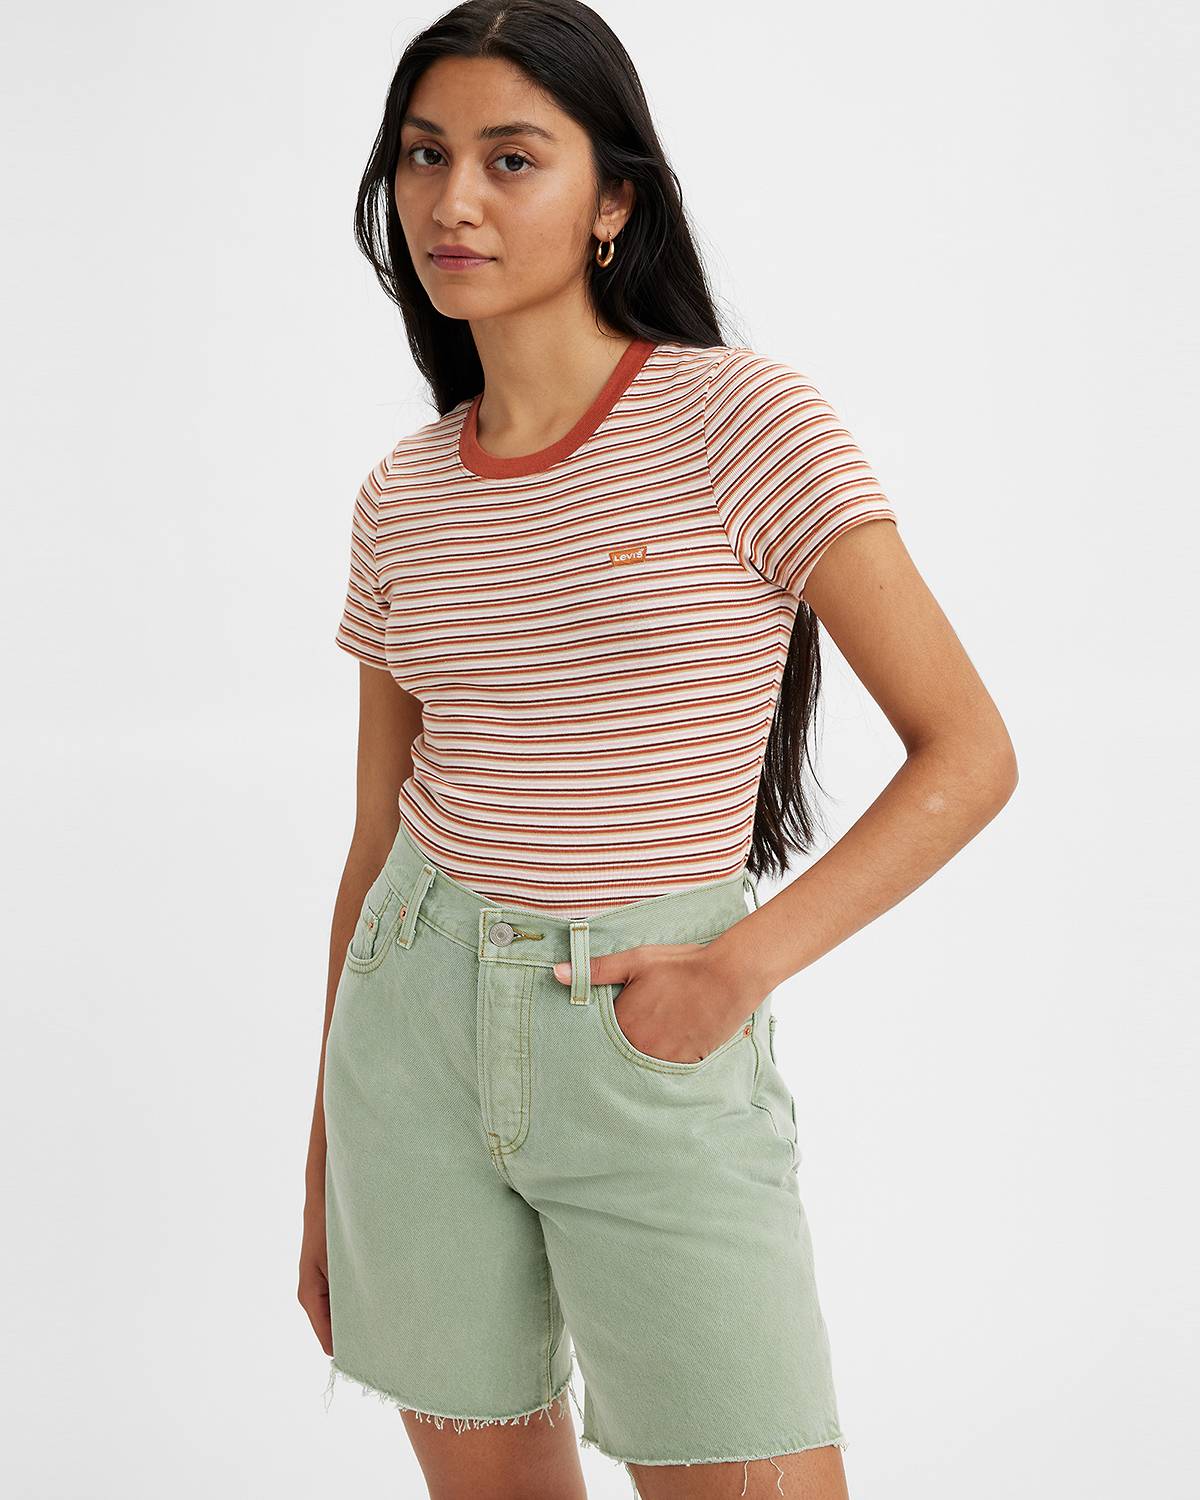 Model wearing striped shirt